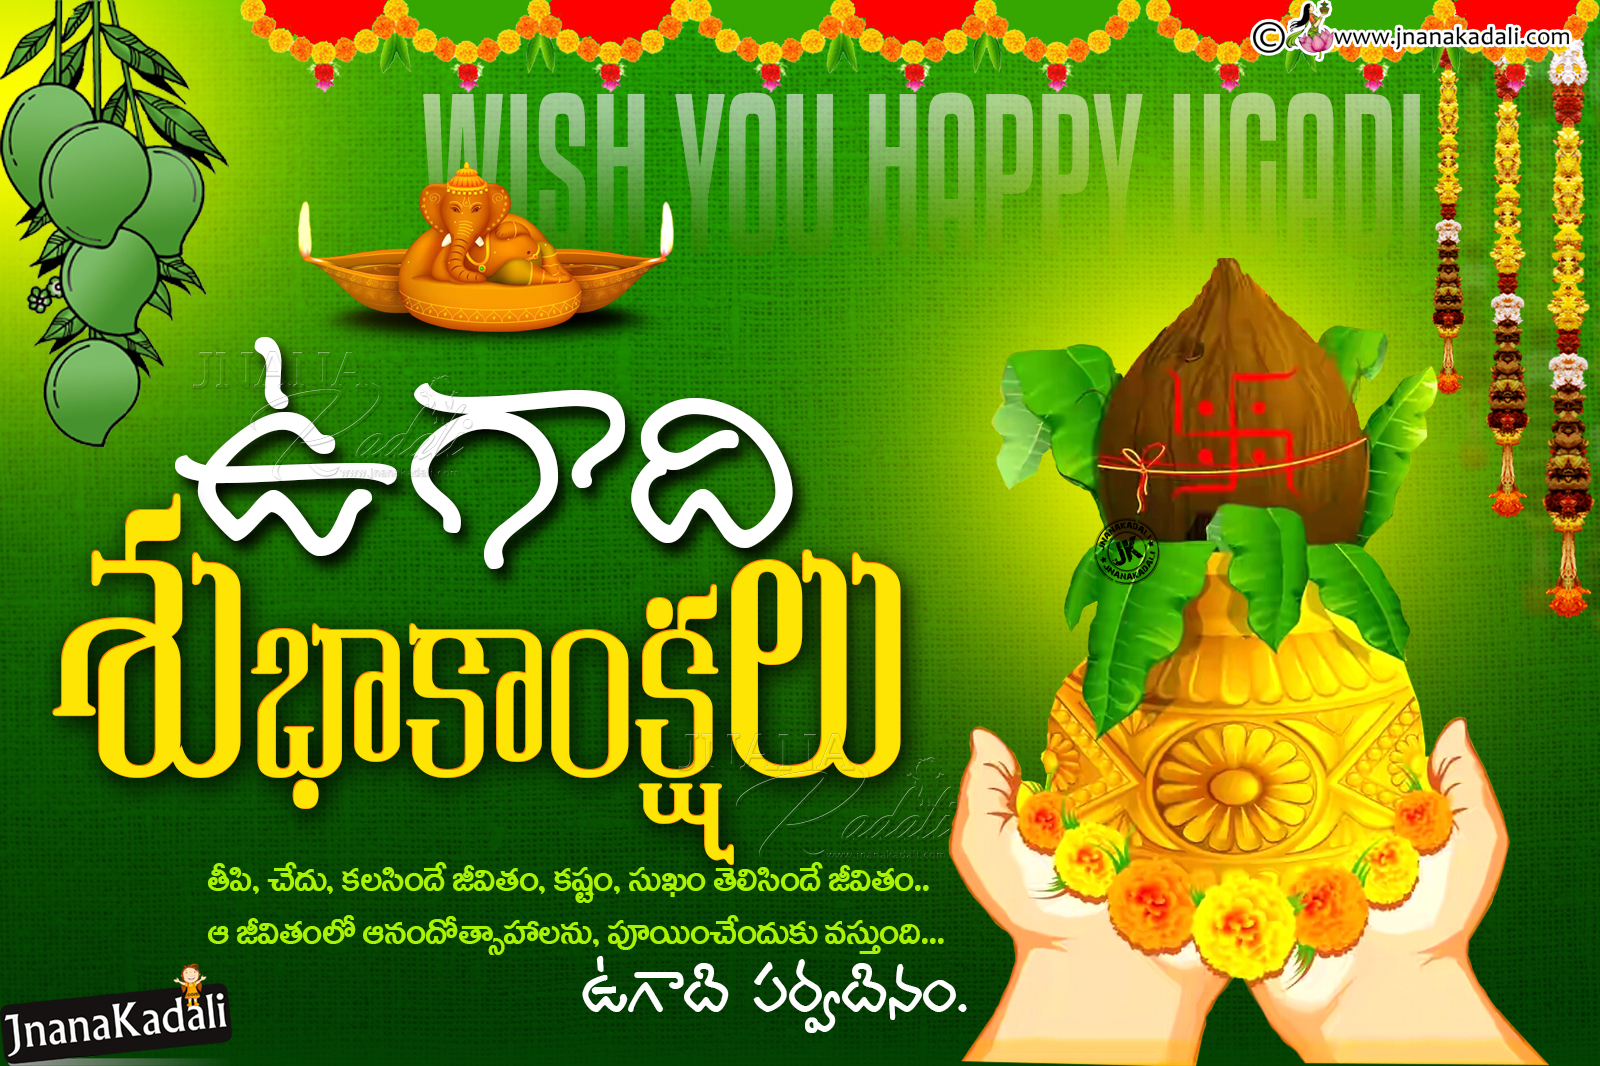 Ugadi Subhakankshalu quotes wishes Greetings in TeluguHappy Ugadi